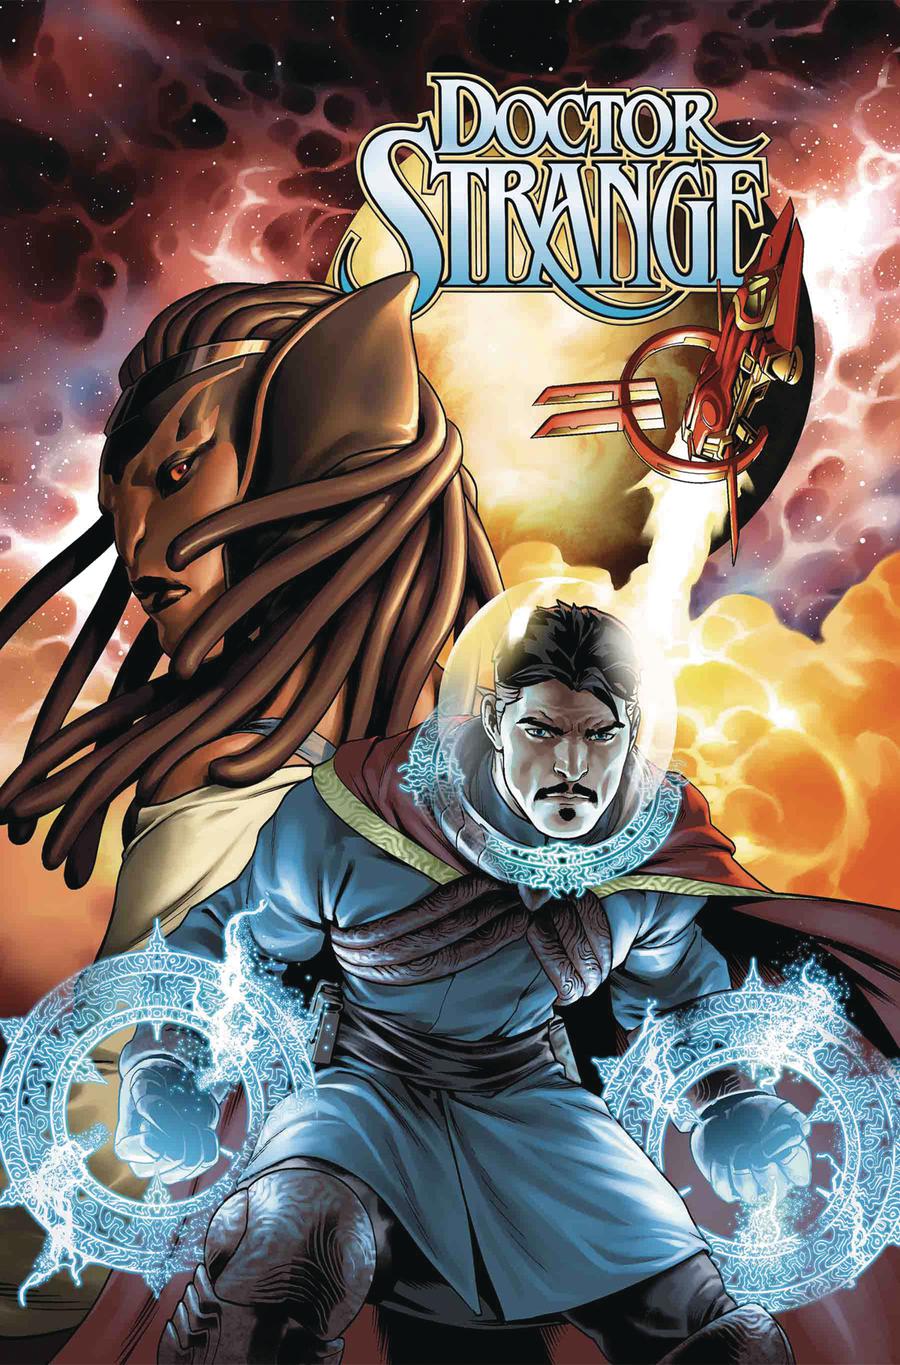 Doctor Strange Vol 5 #1 Cover A 1st Ptg Regular Jesus Saiz Cover